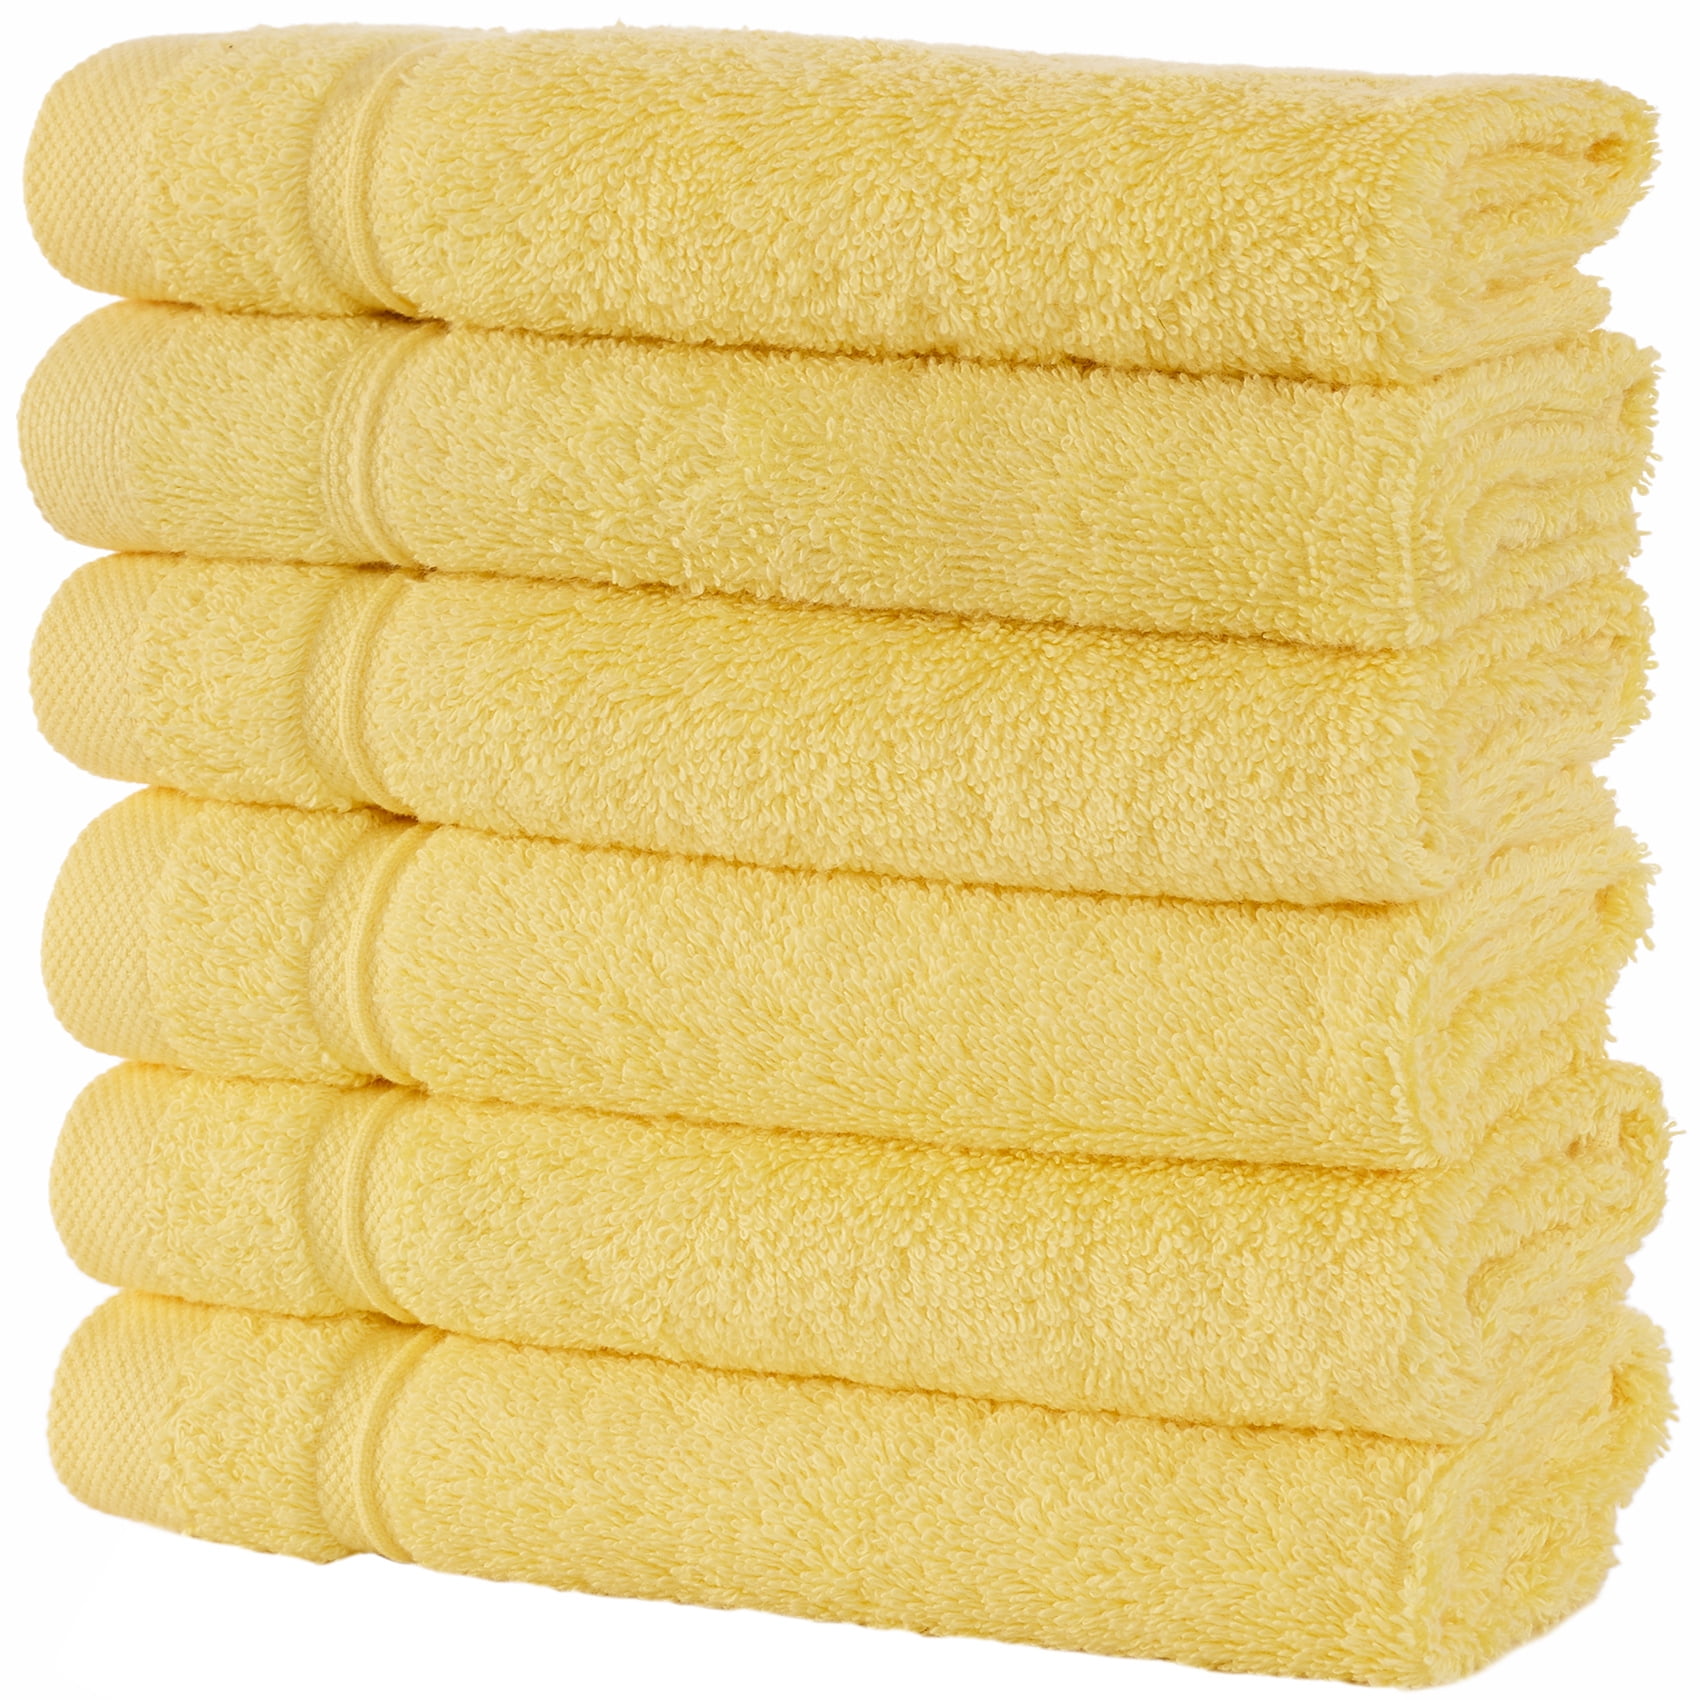 Women Adult Unisex Cotton Absorbent Solid Color Soft Hand Face Bath Towel Home 